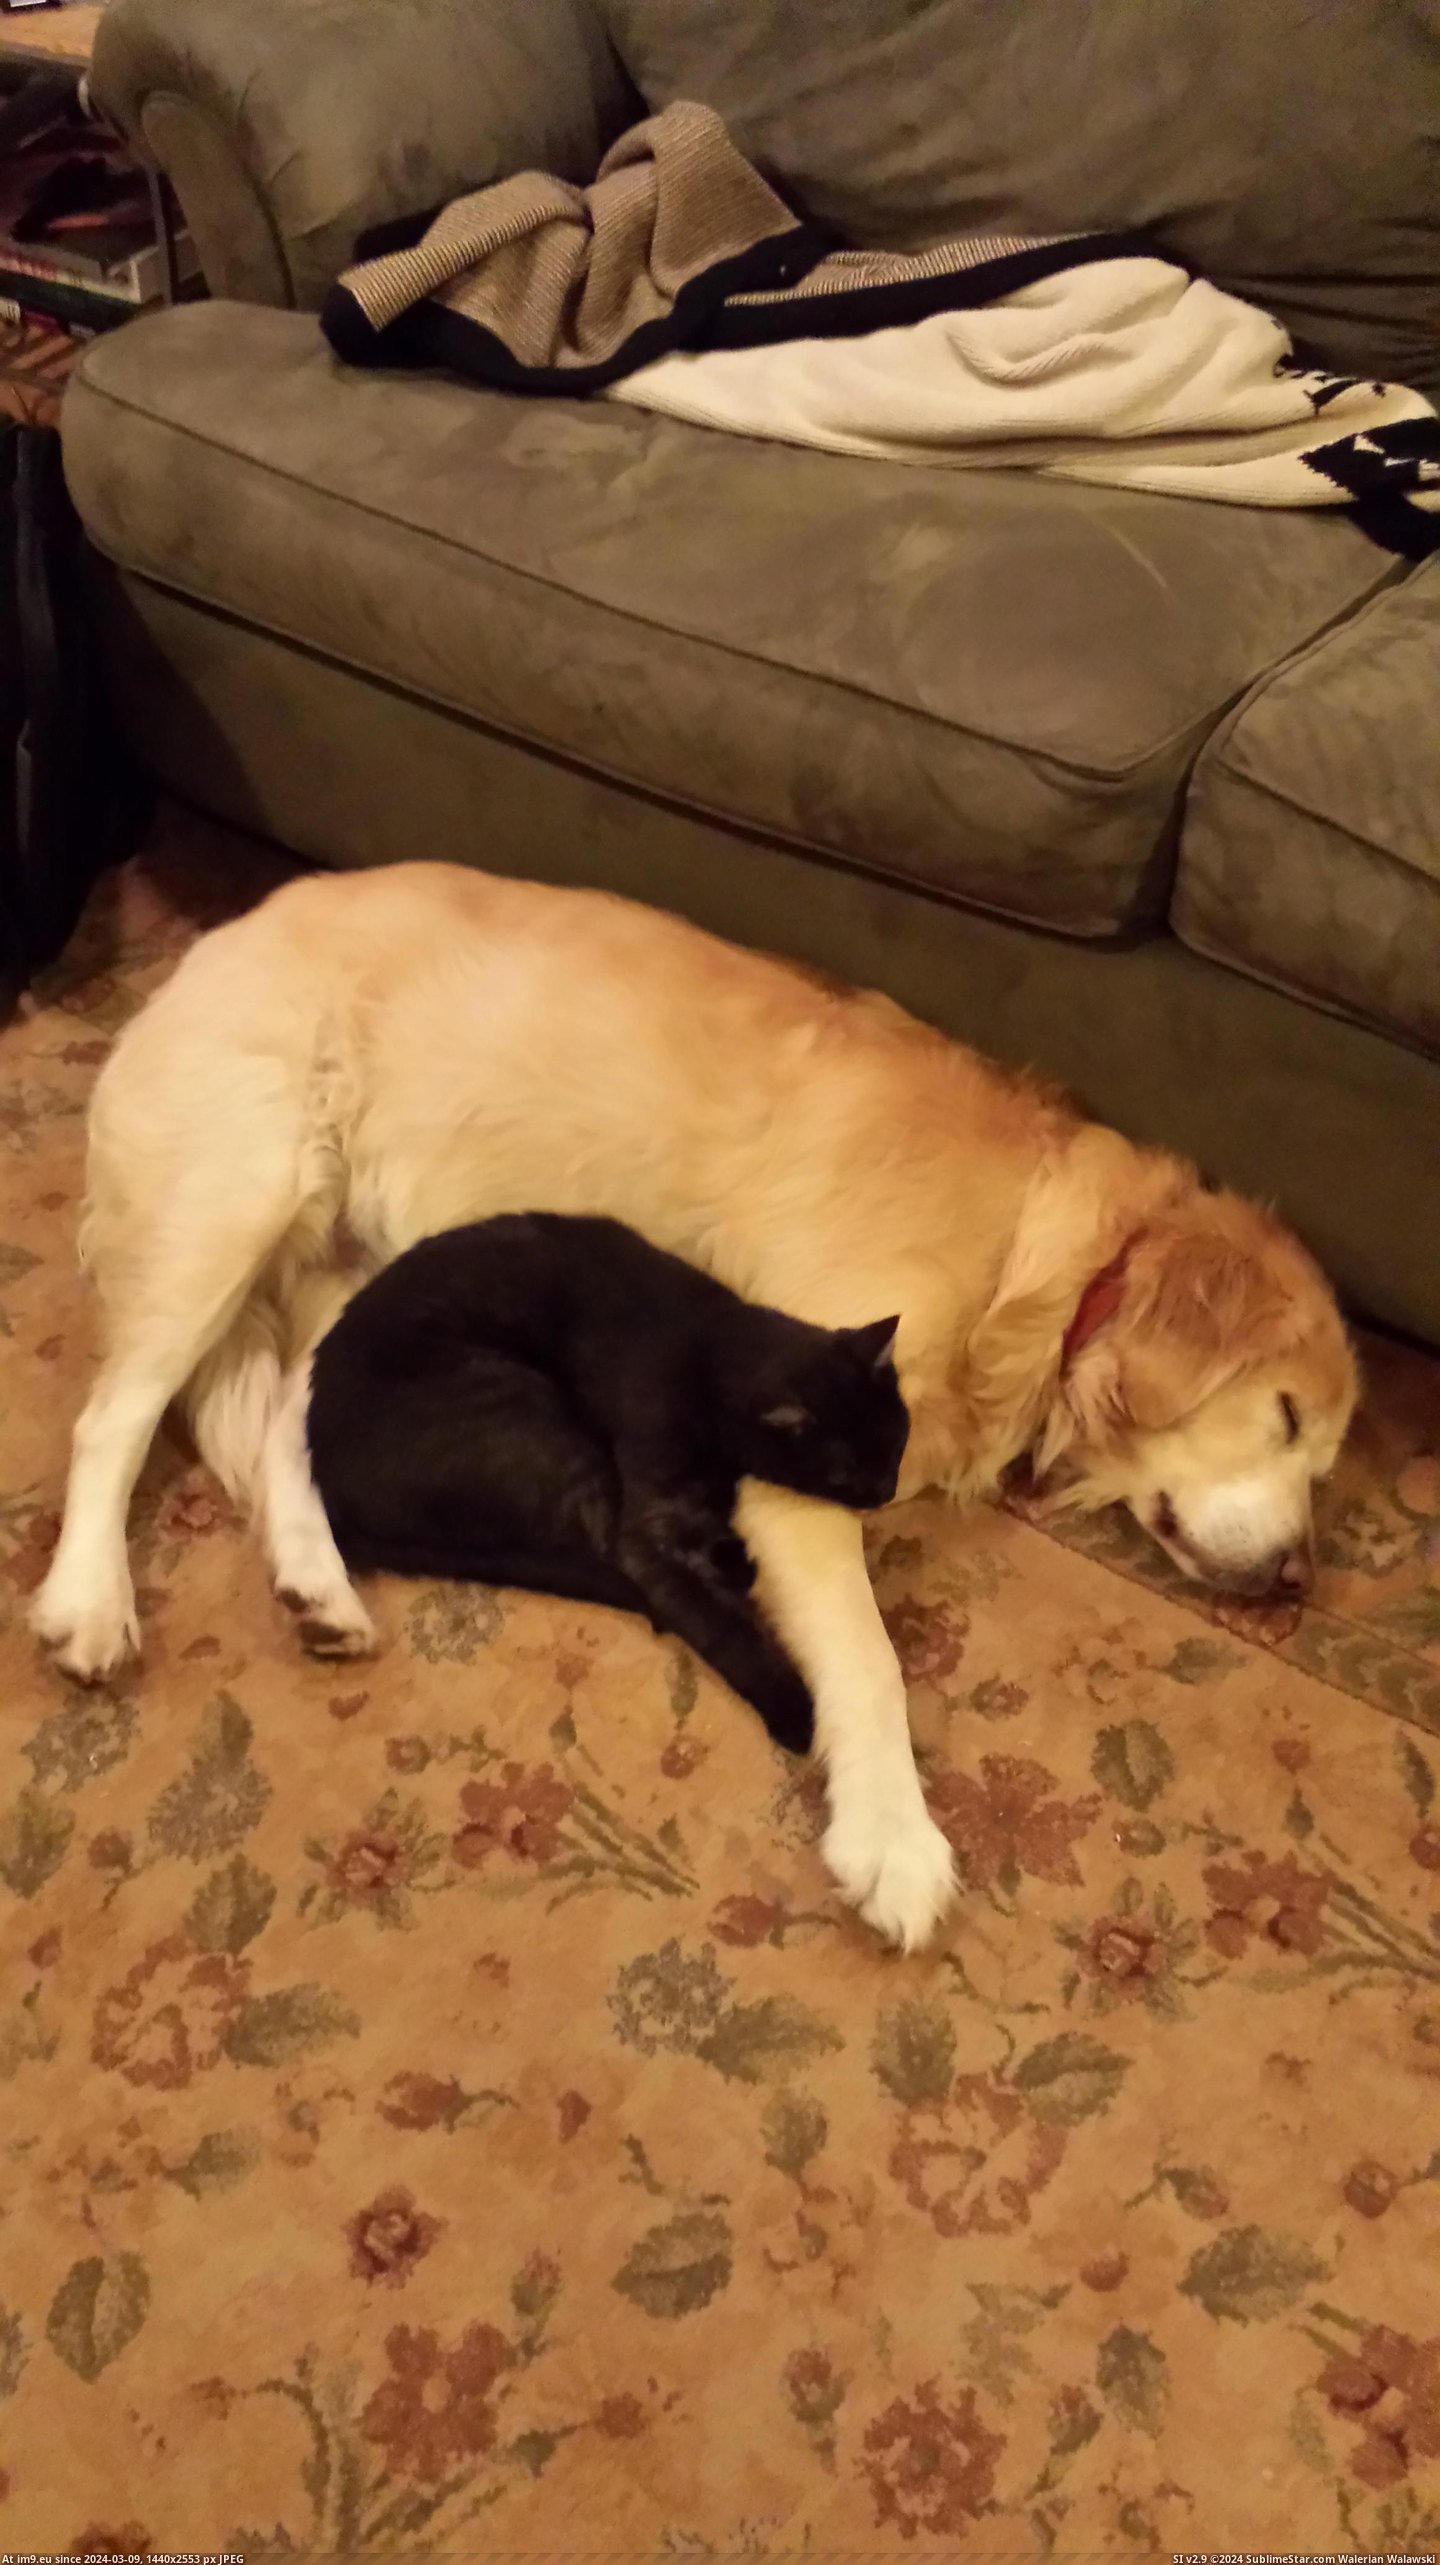 #Cat #Sleep #Dog [Aww] My dog and cat sleep together Pic. (Bild von album My r/AWW favs))